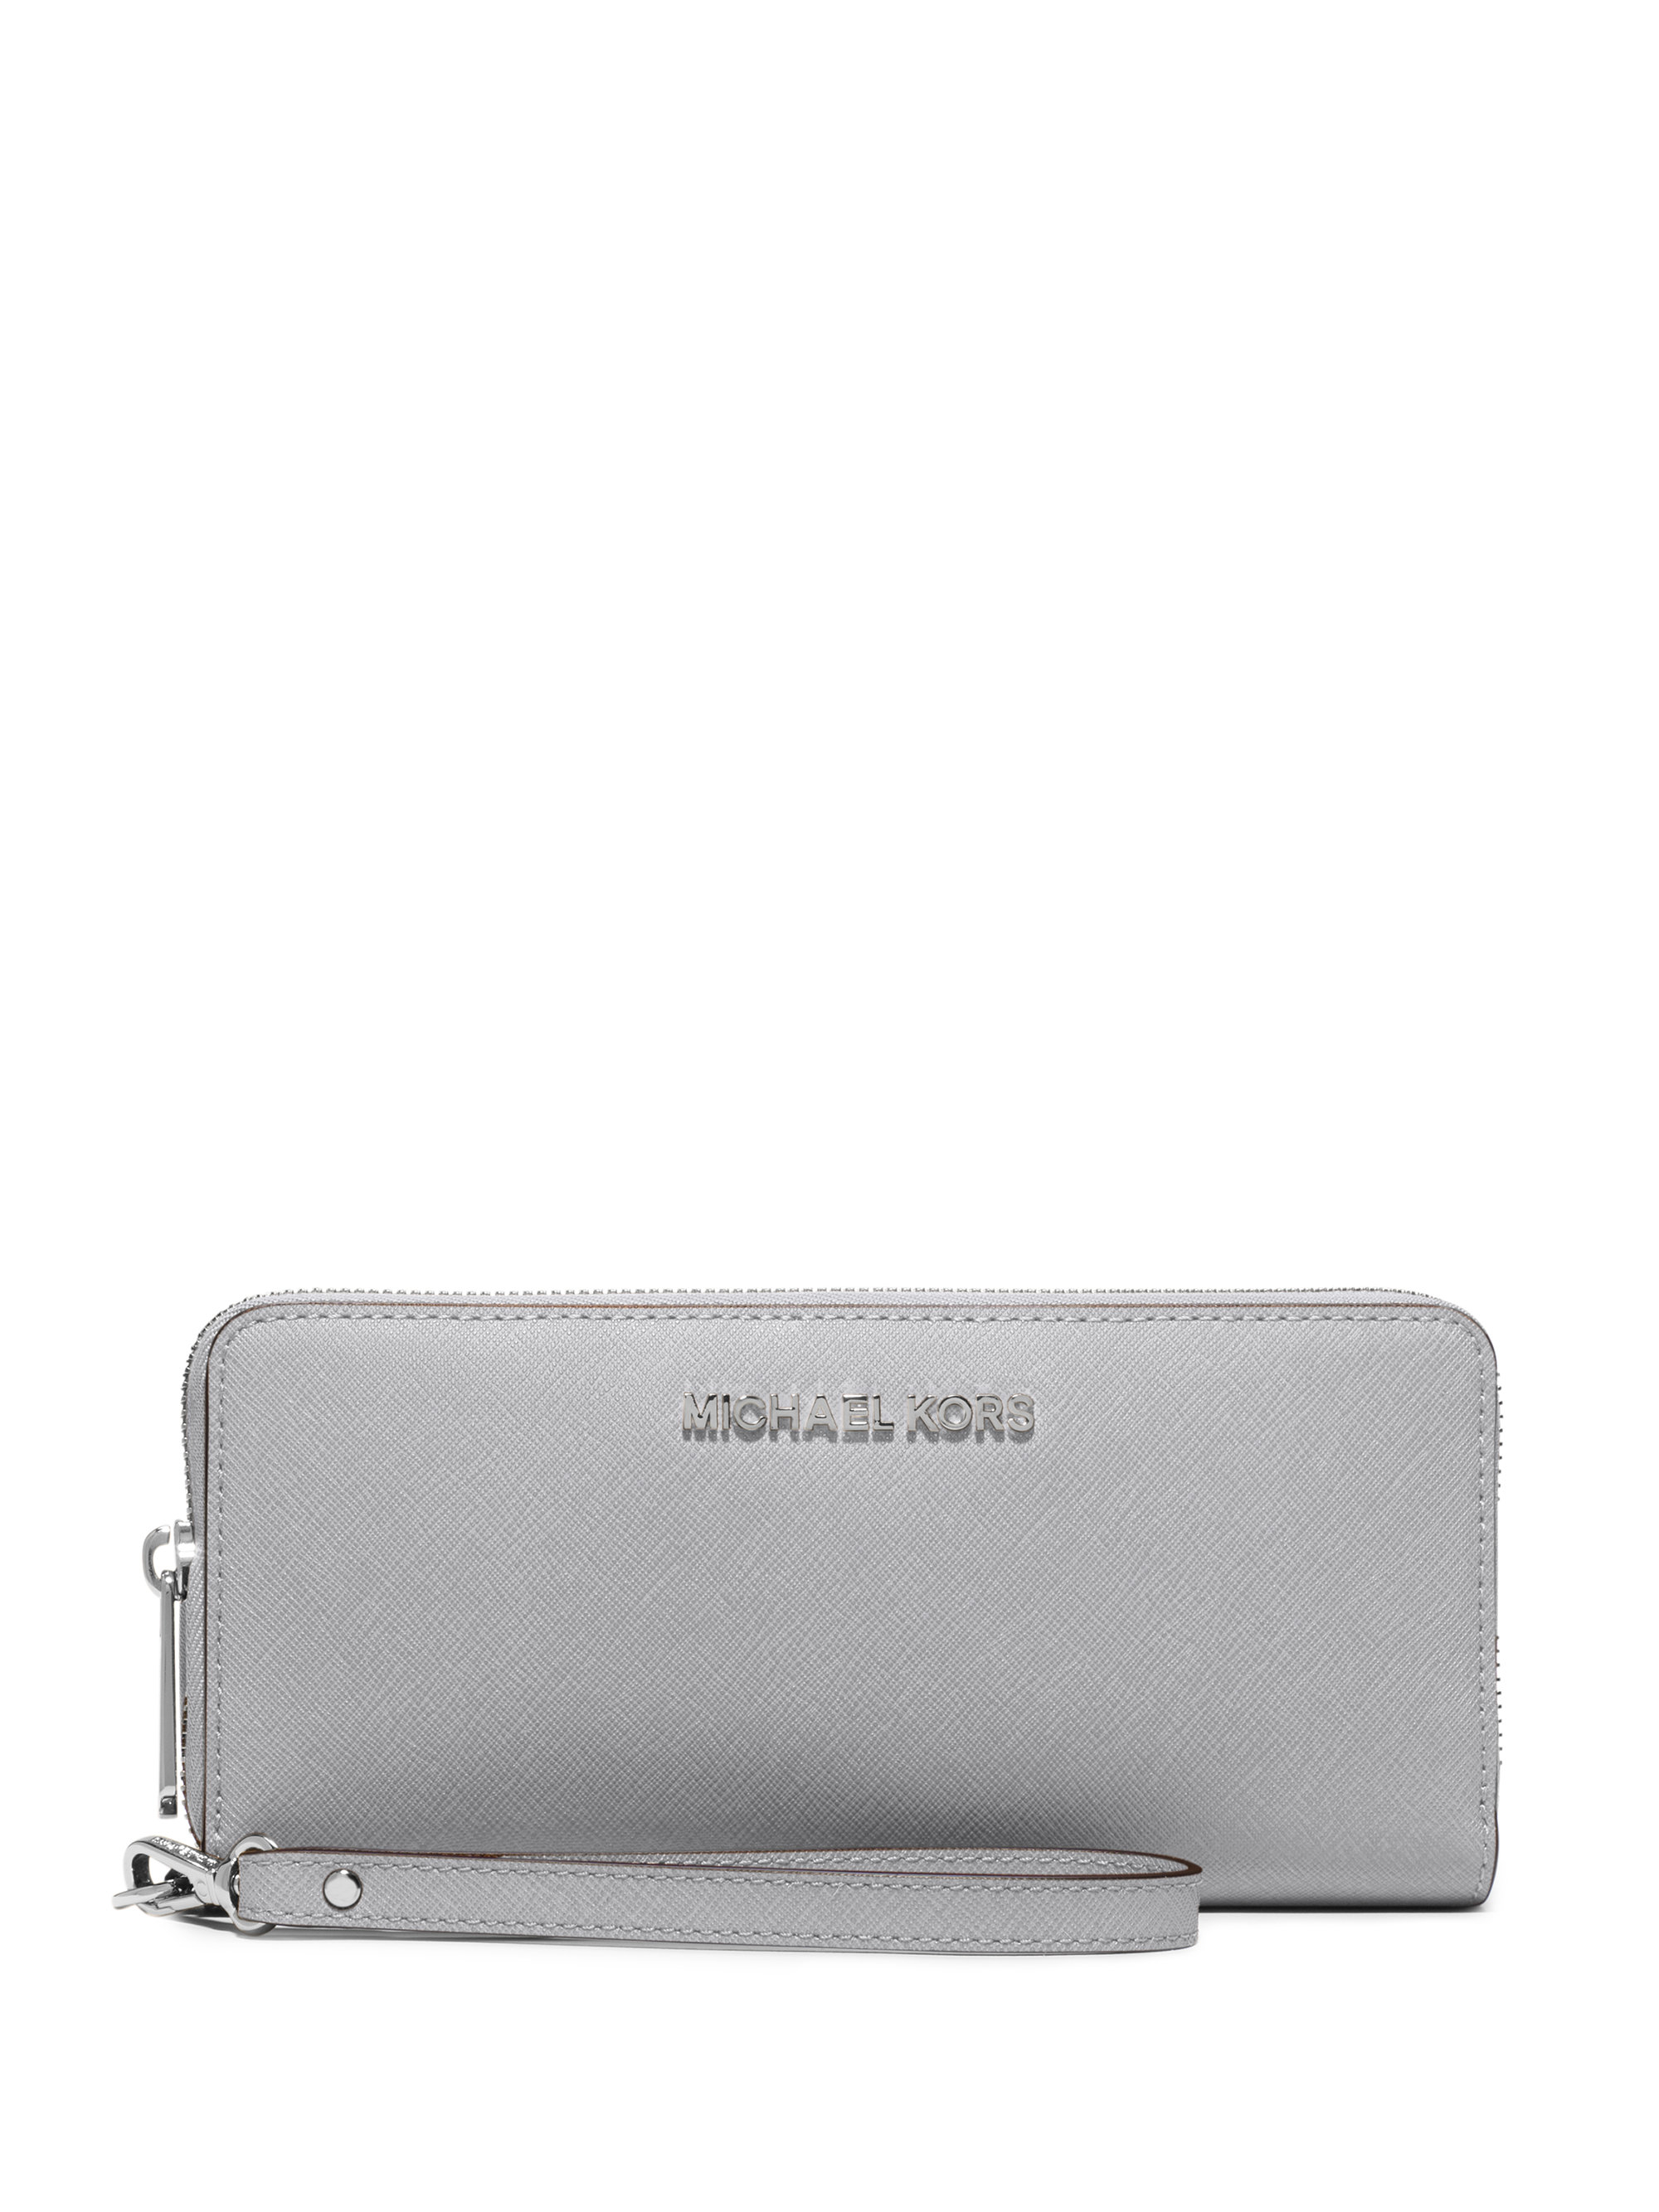 MICHAEL Michael Kors Jet Set Travel Leather Wallet in Gray | Lyst